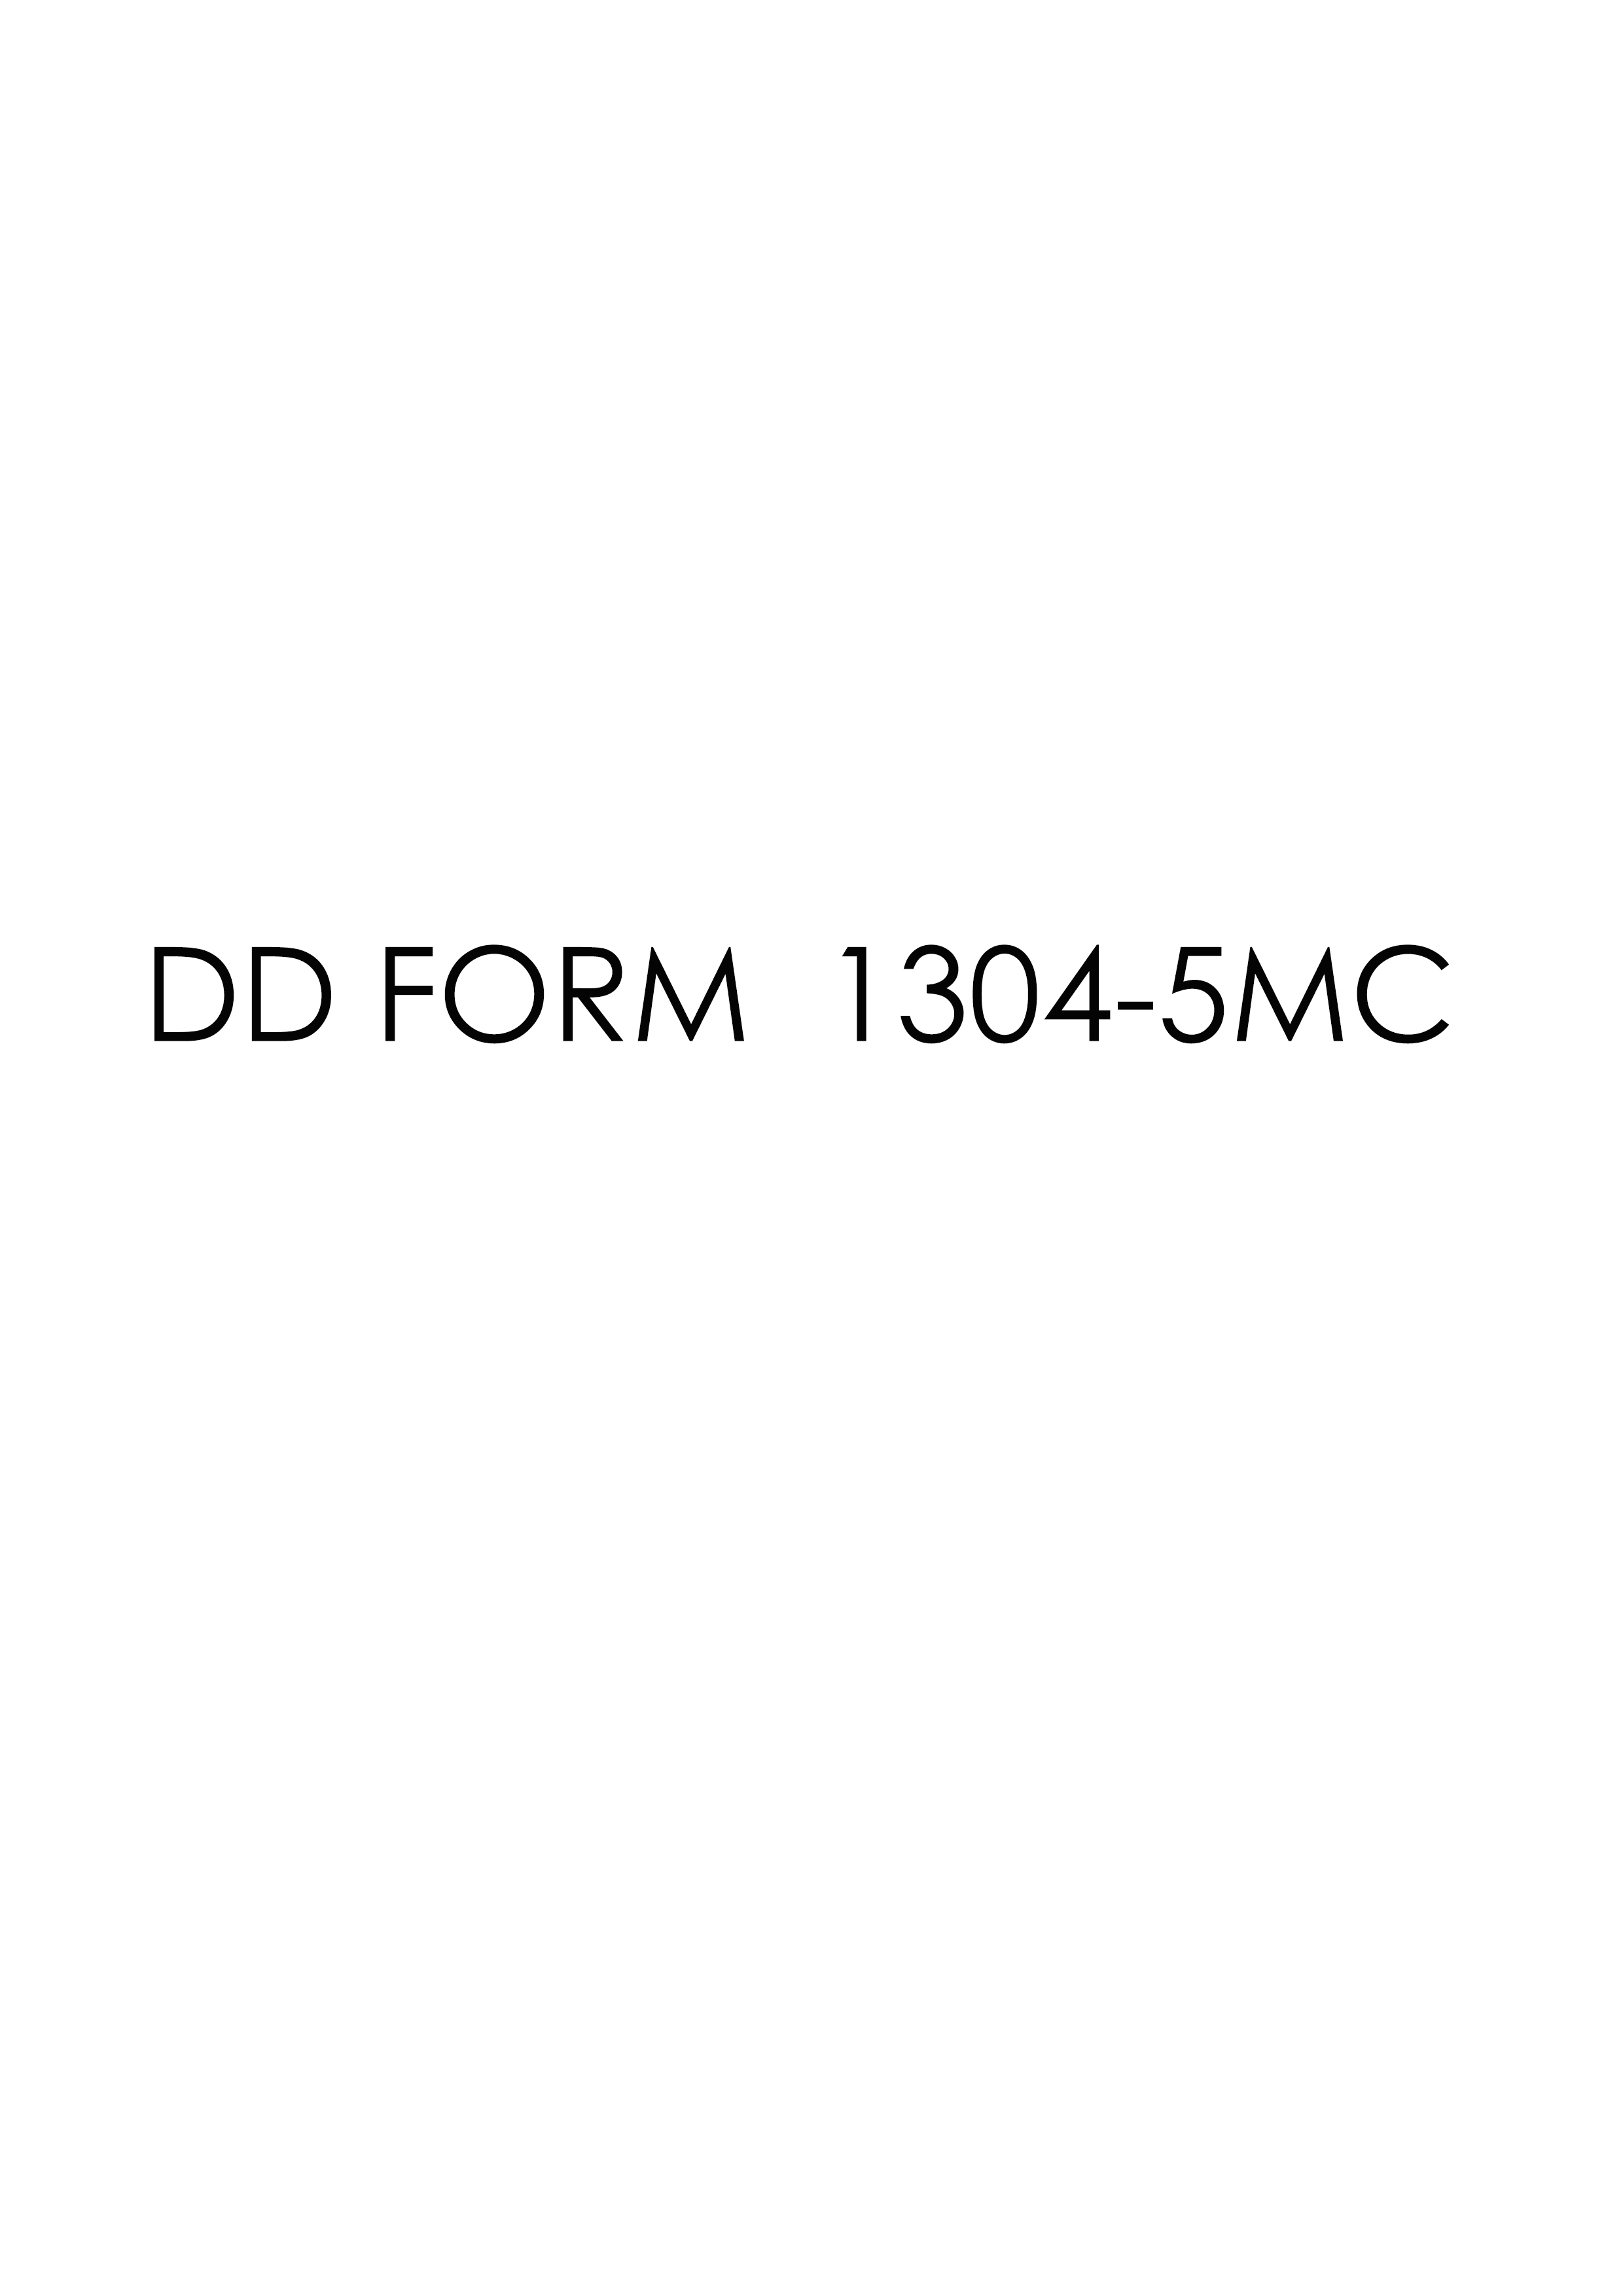 Download Fillable dd Form 1304-5MC